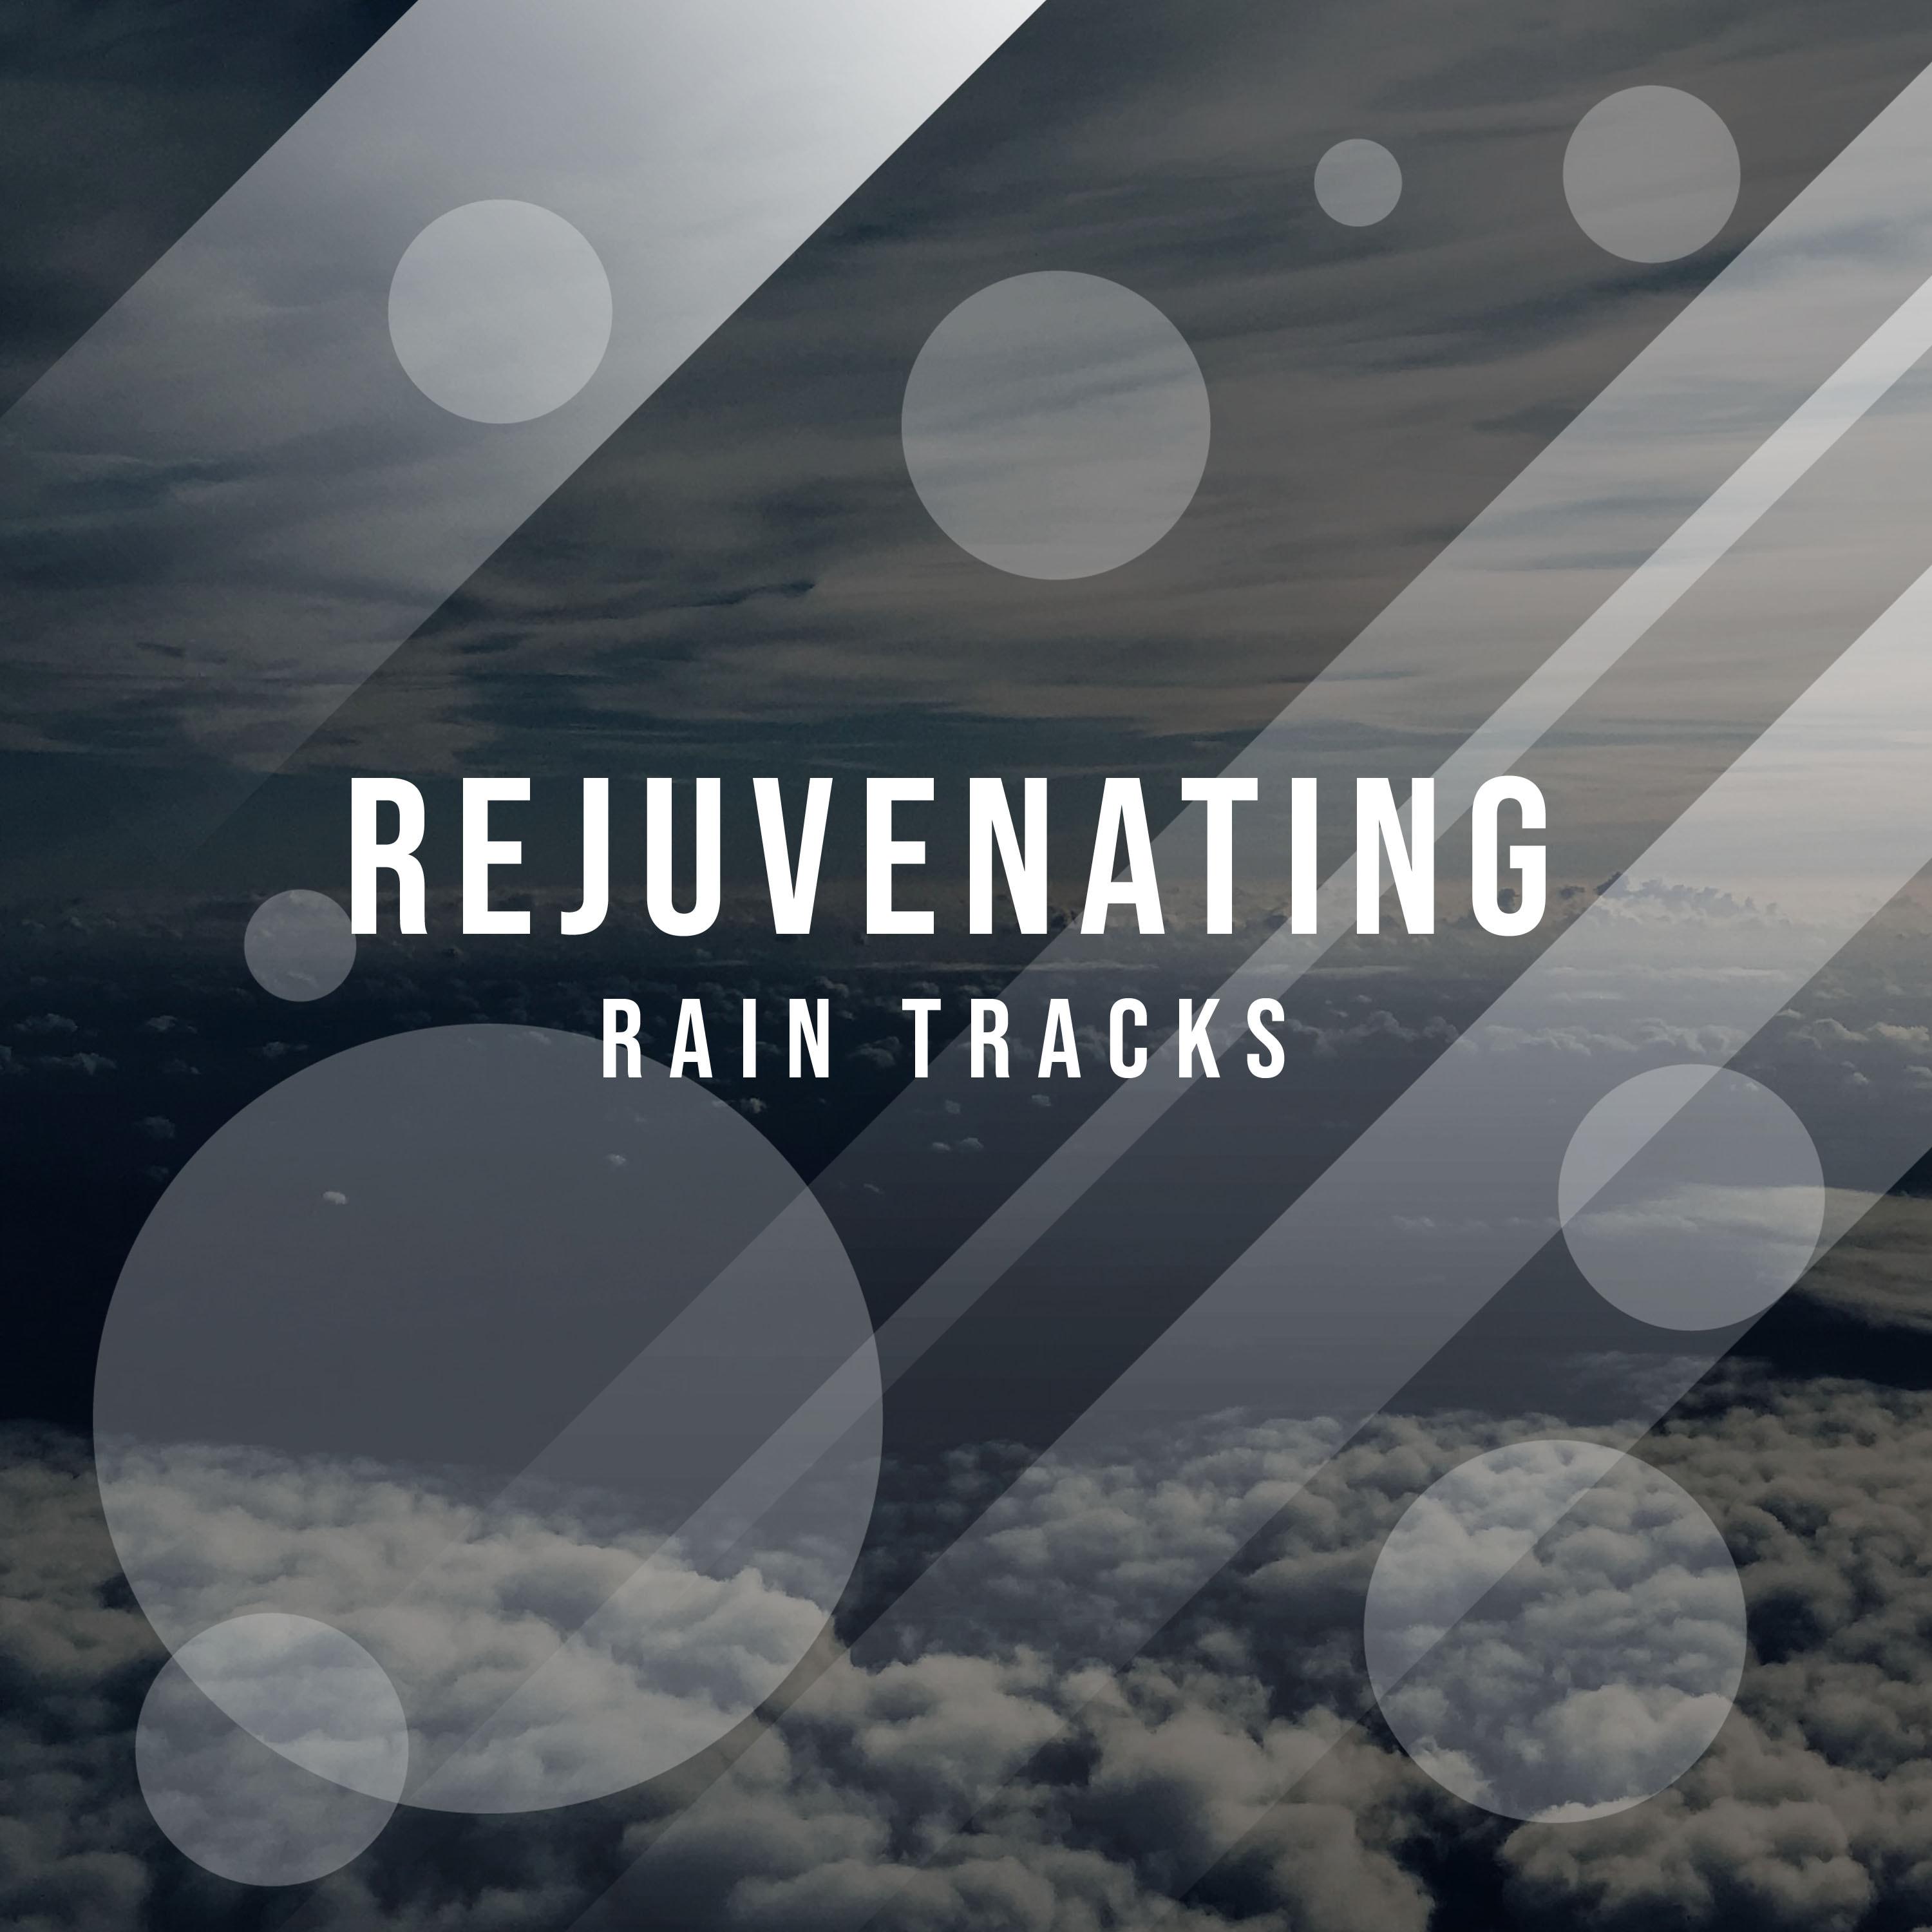 #1 Hour of Rejuvenating Rain Tracks from Nature